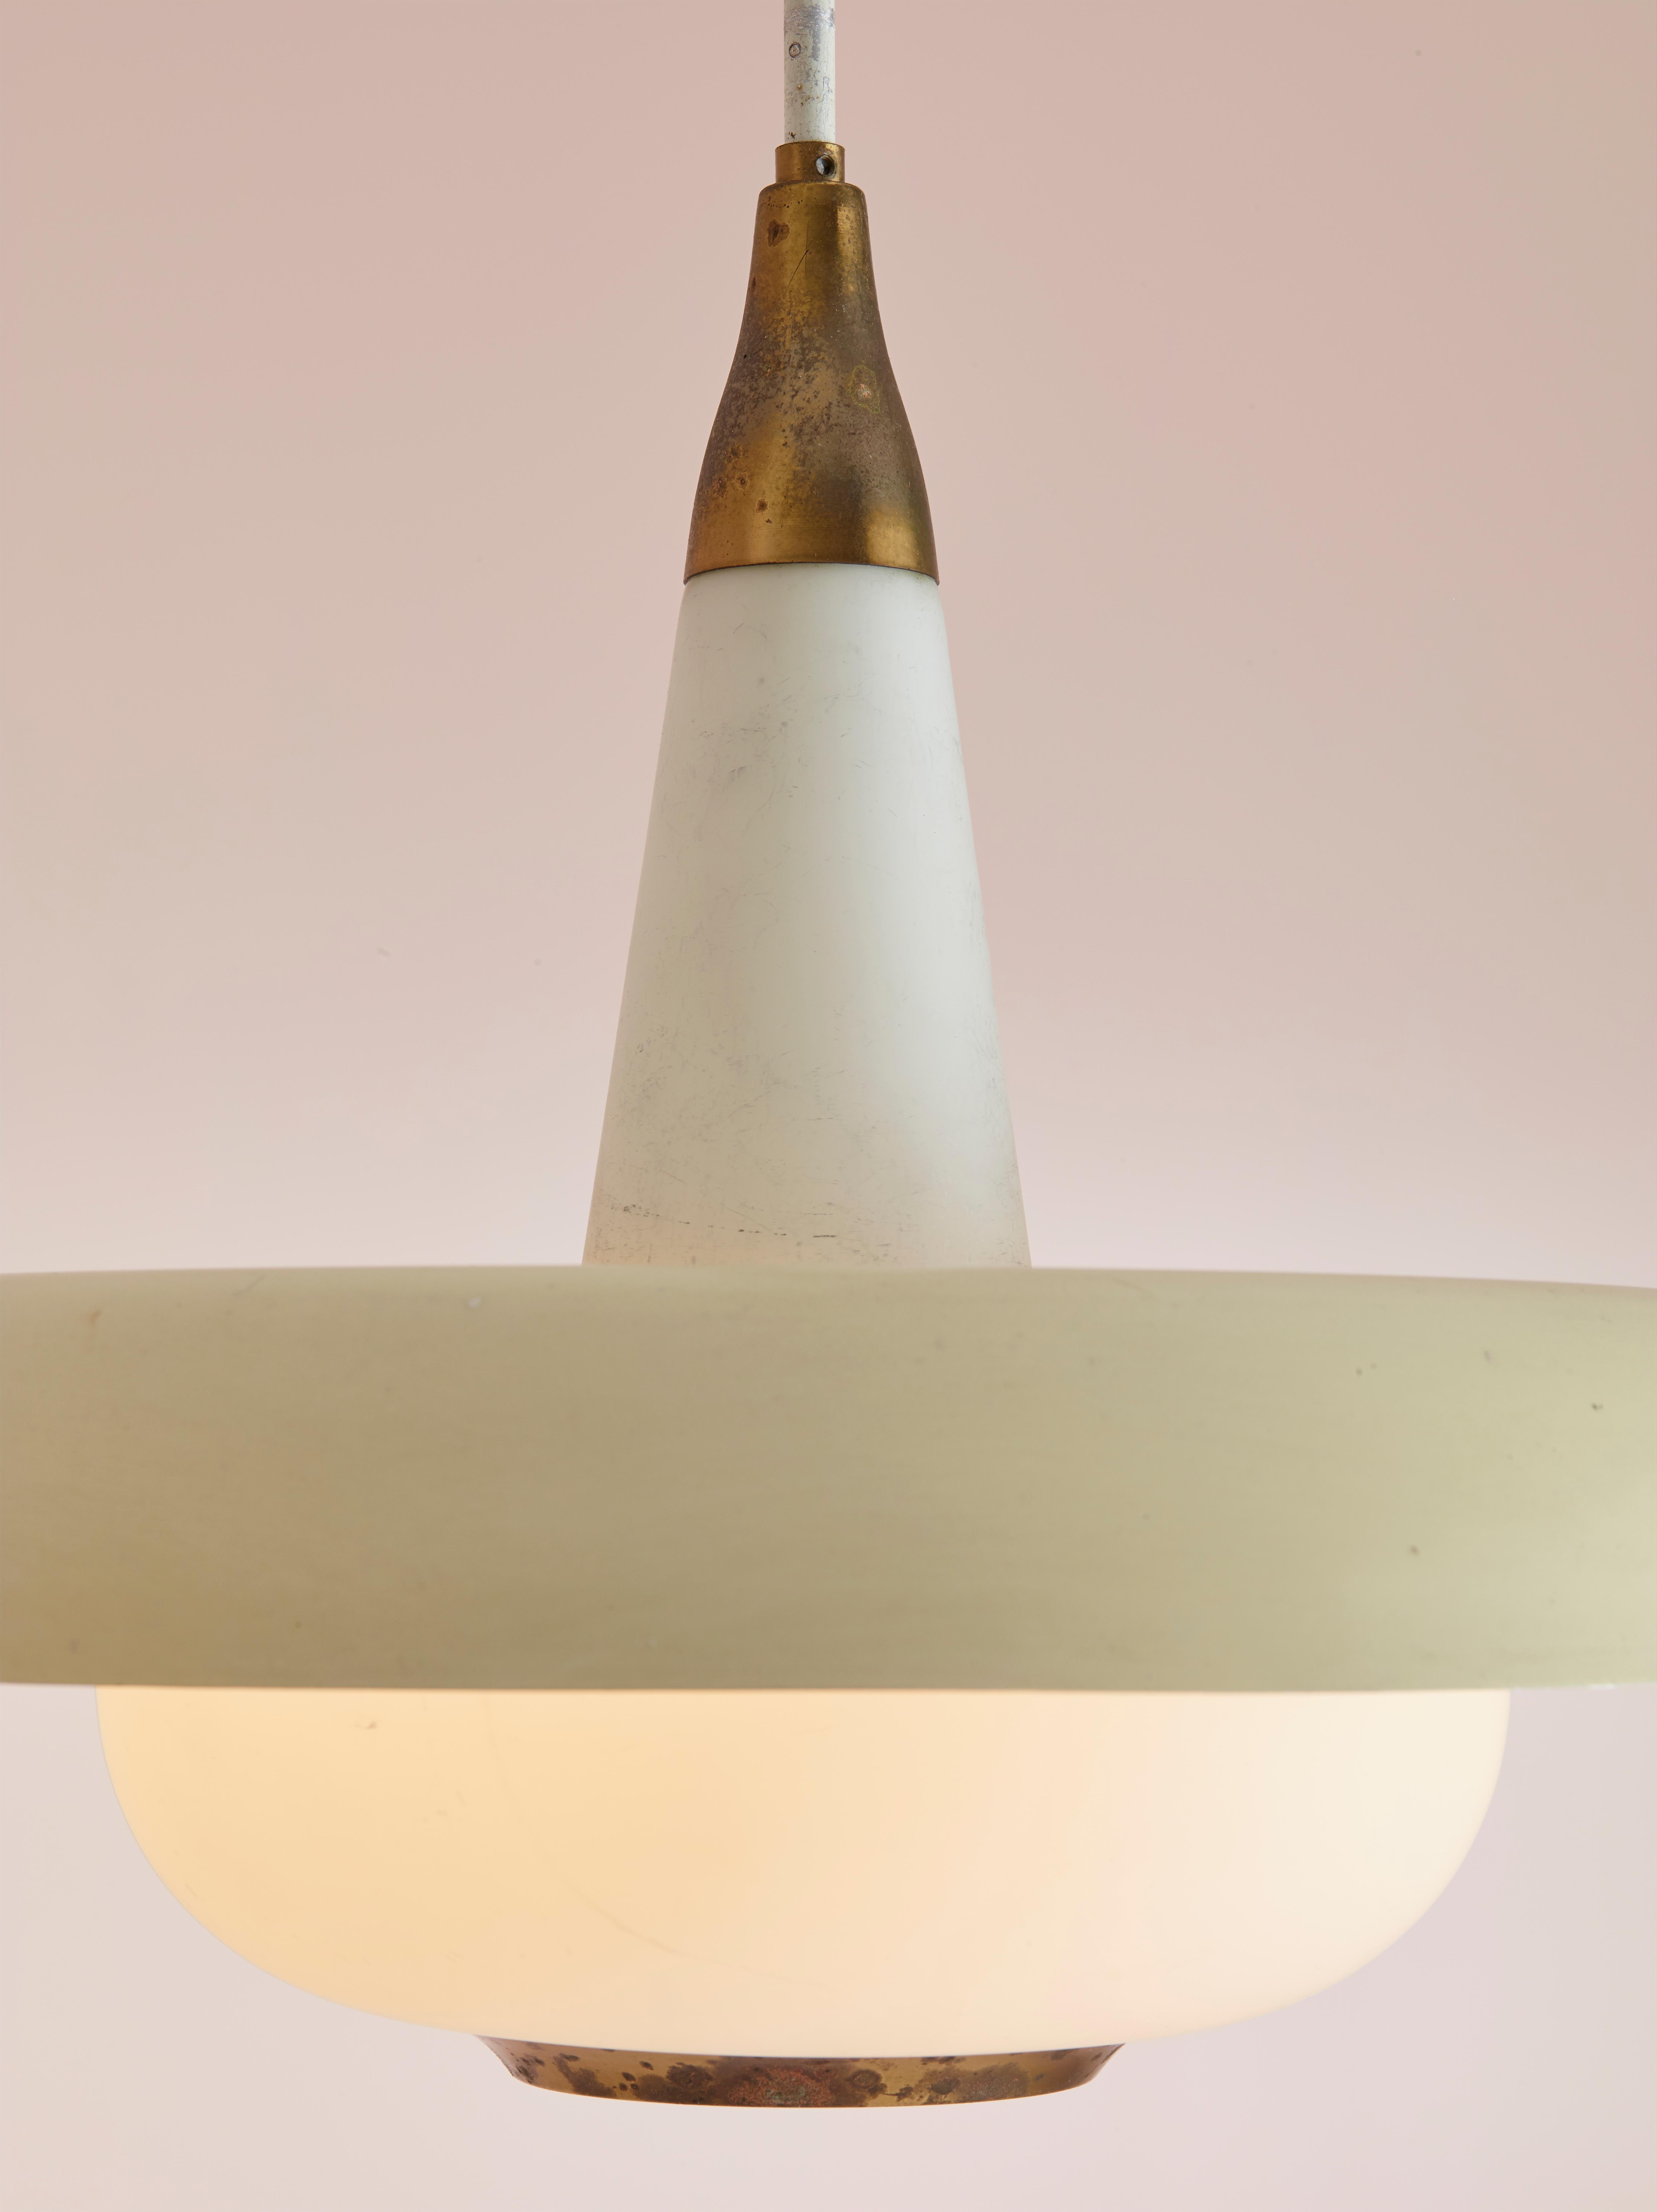 Mid-20th Century Stilnovo Midcentury Pendant Light Made of Opal Glass, Brass & Metal, Italy 1950s For Sale